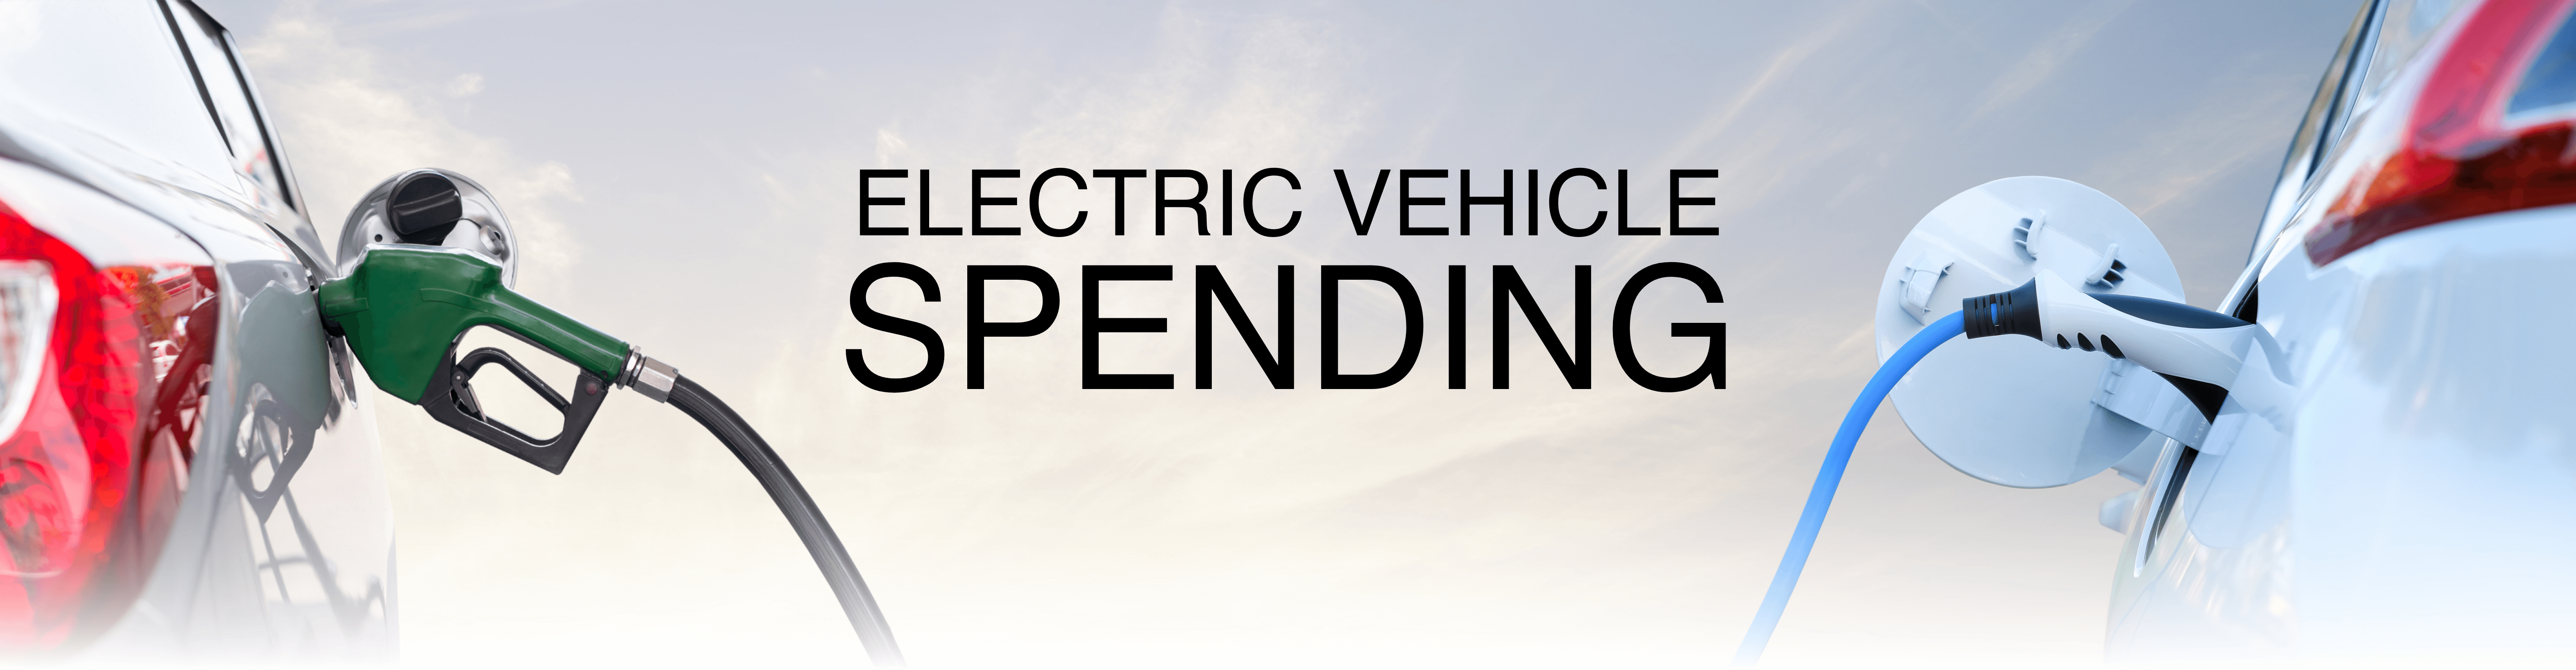 Electric Vehicle spending